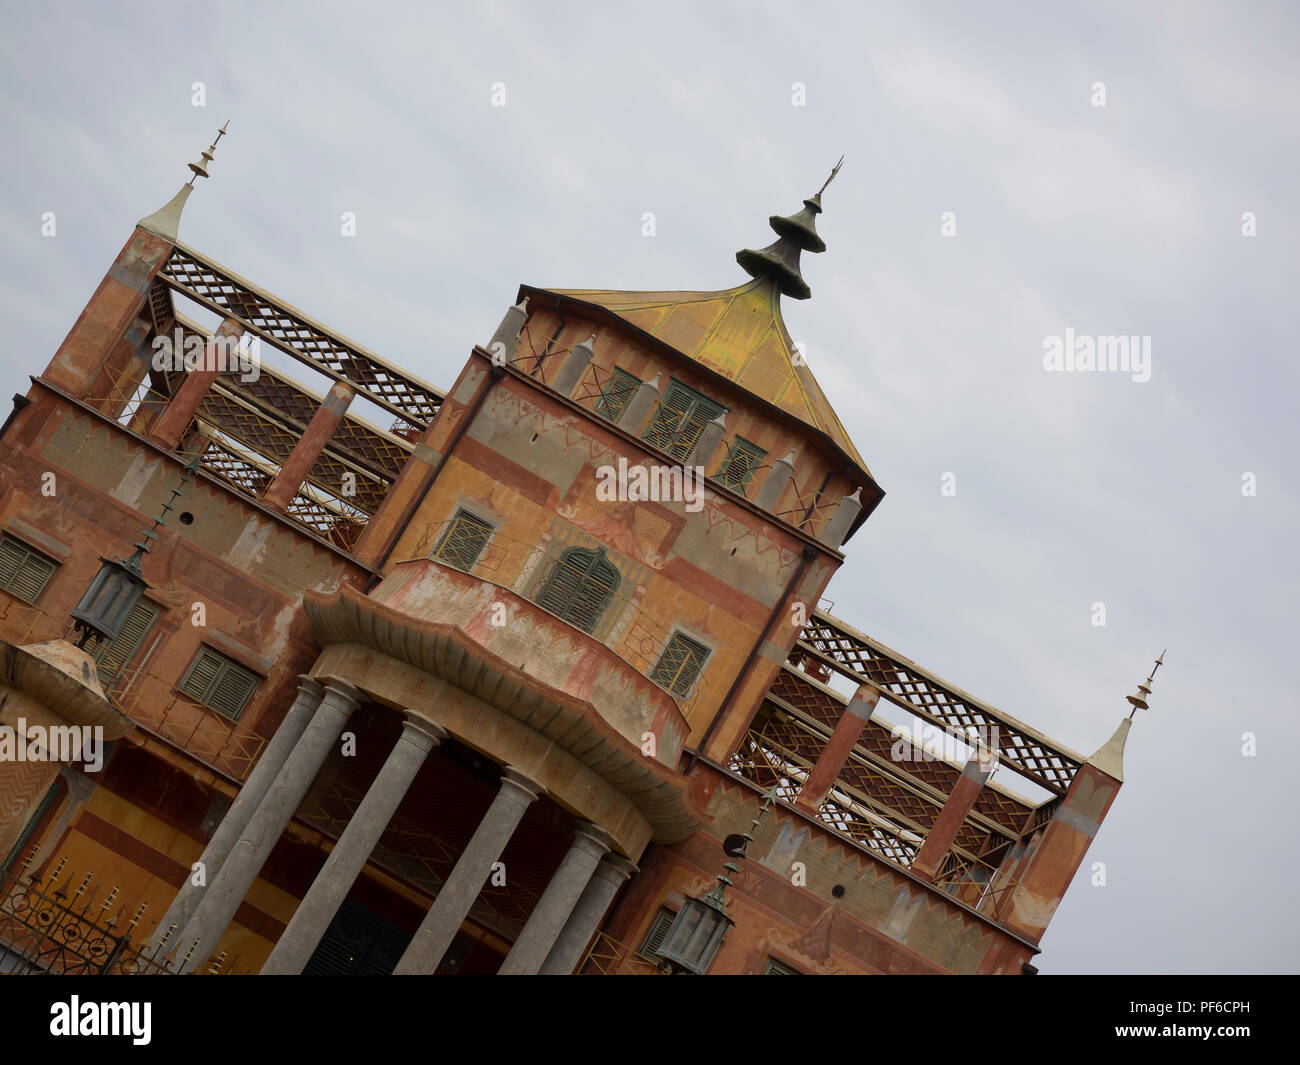 PALERMO, SICILY, ITALY - MAY 21, 2018: The Chinese Palace (Palazzina Cinese) Stock Photo